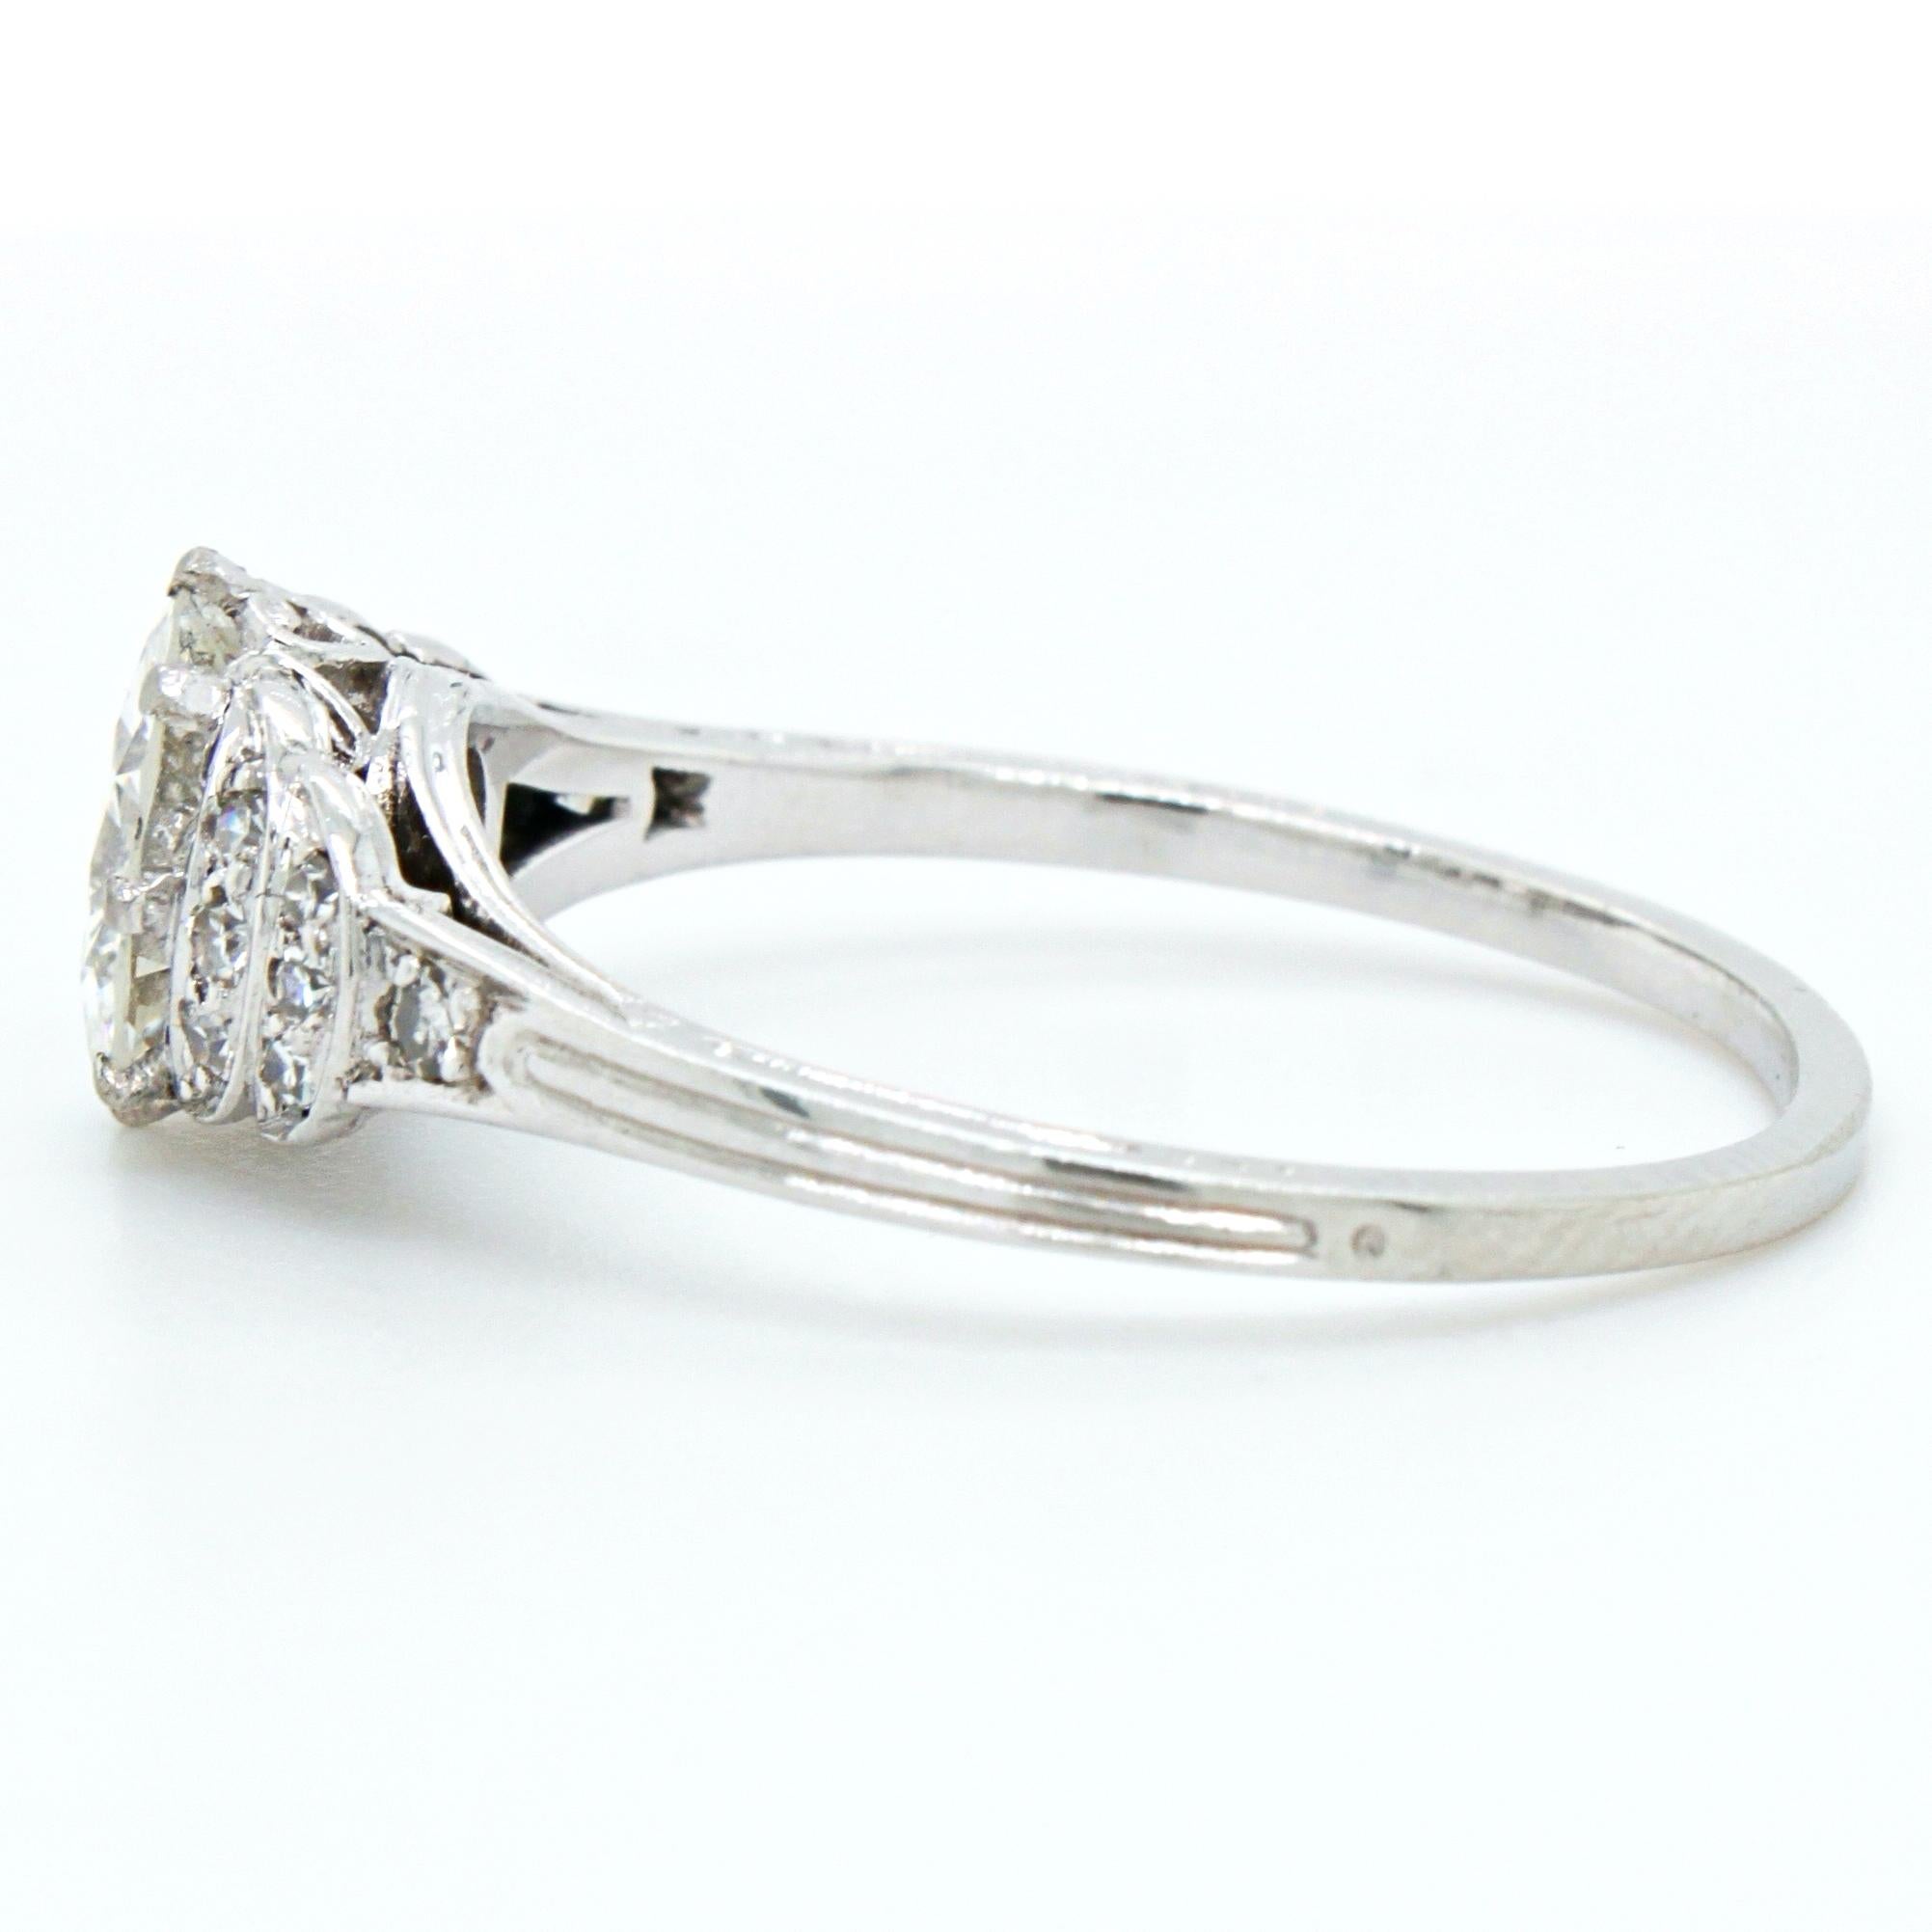 1.60 Carat, G/H-VS Diamond Solitaire Art Deco Ring, circa 1920s 4